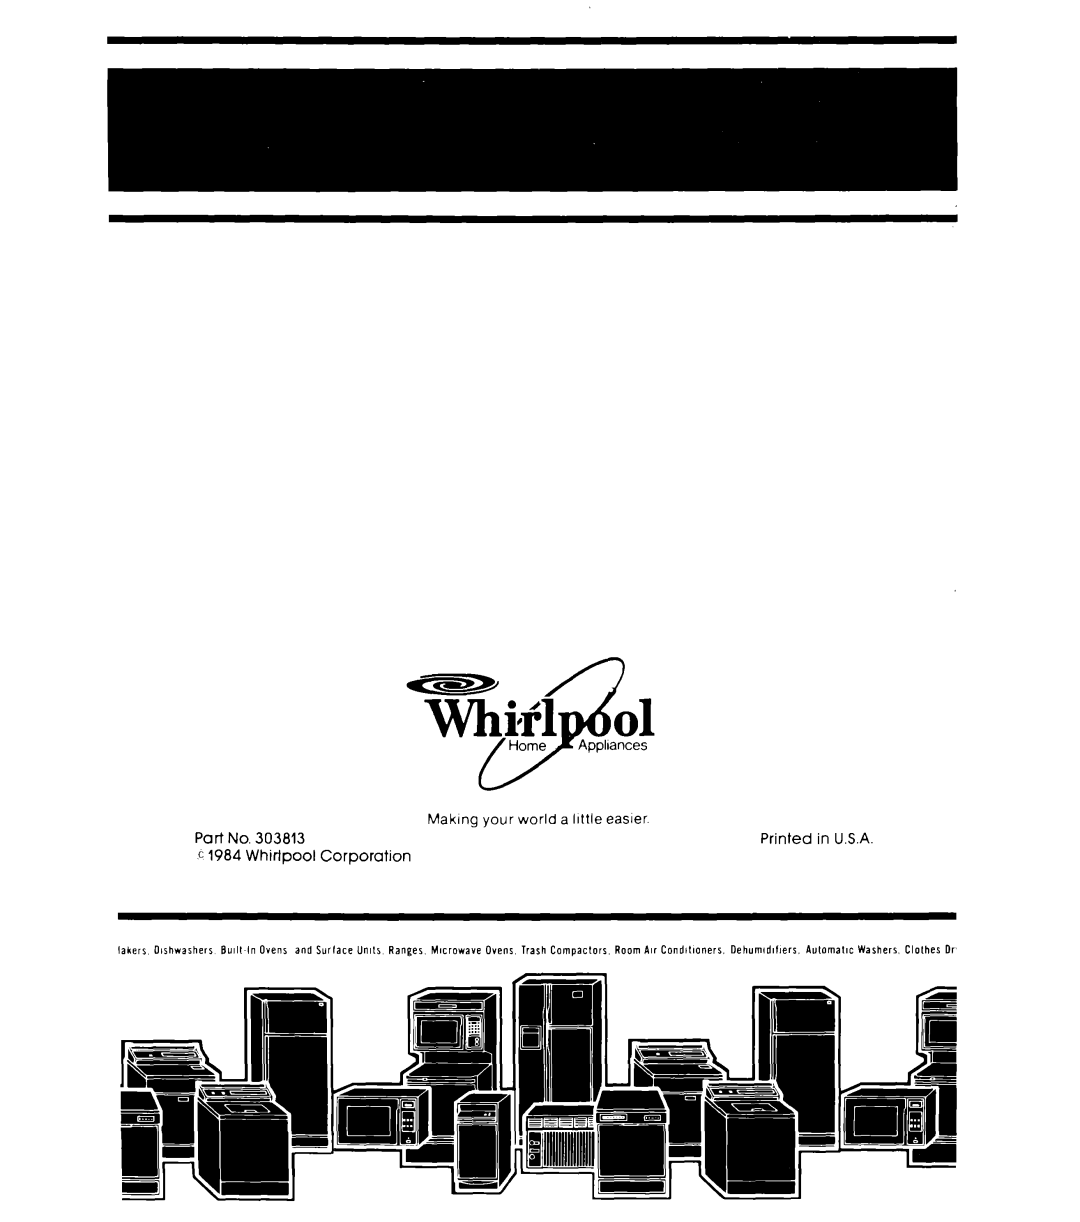 Whirlpool DU5503XL Making your world a llttle, easier, Part, Printed, in U.S.A, c 1984 Whirlpool, Corporation, BullbIn 